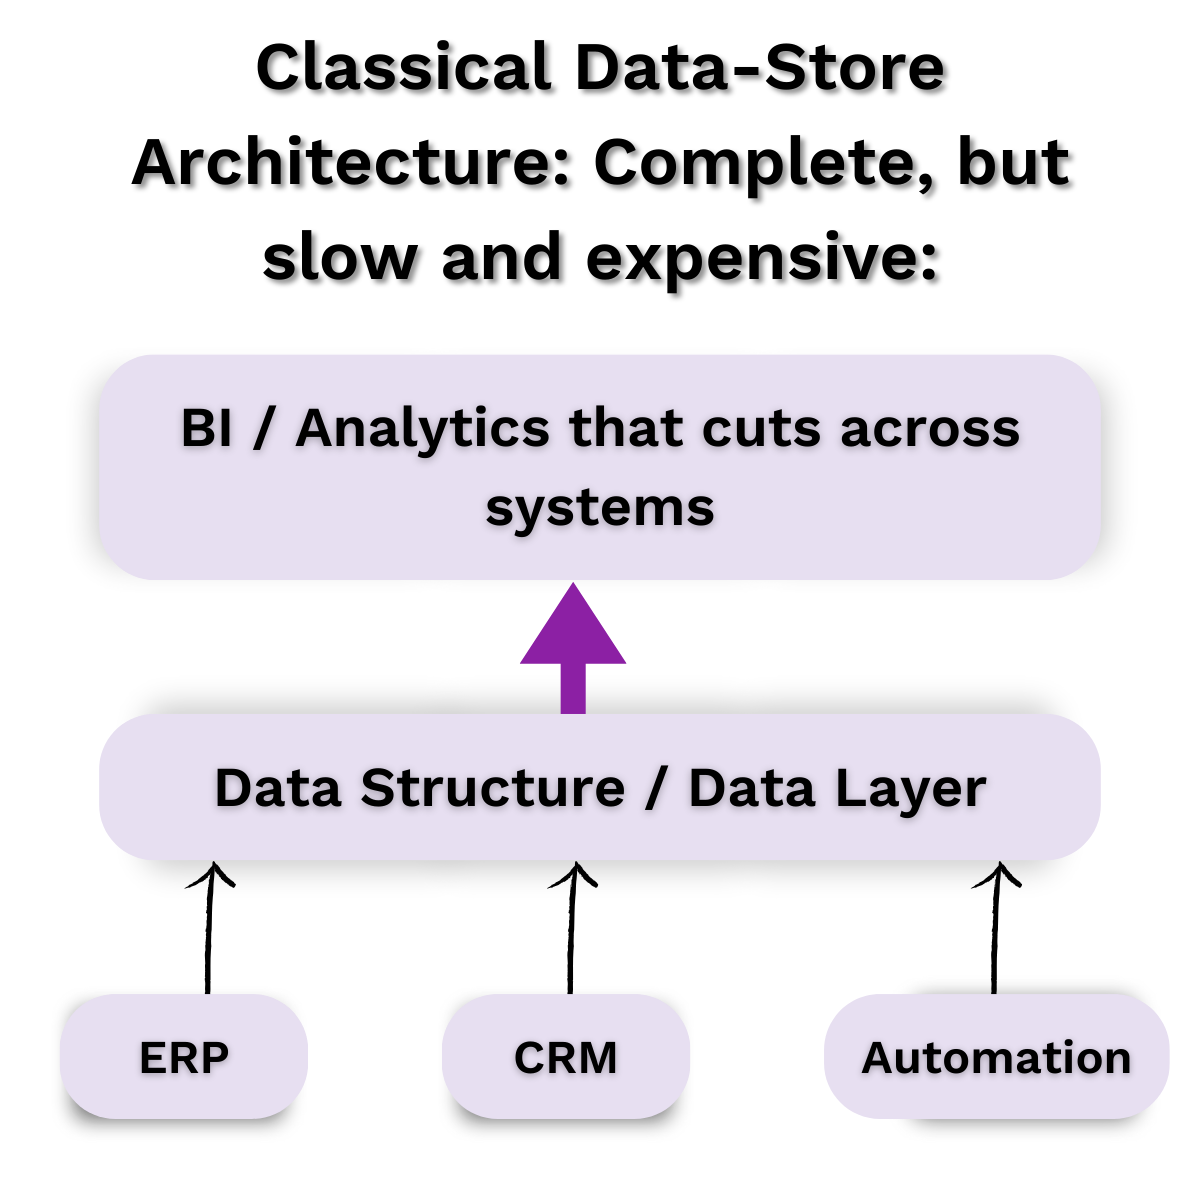 Classical Data-Store Architecture